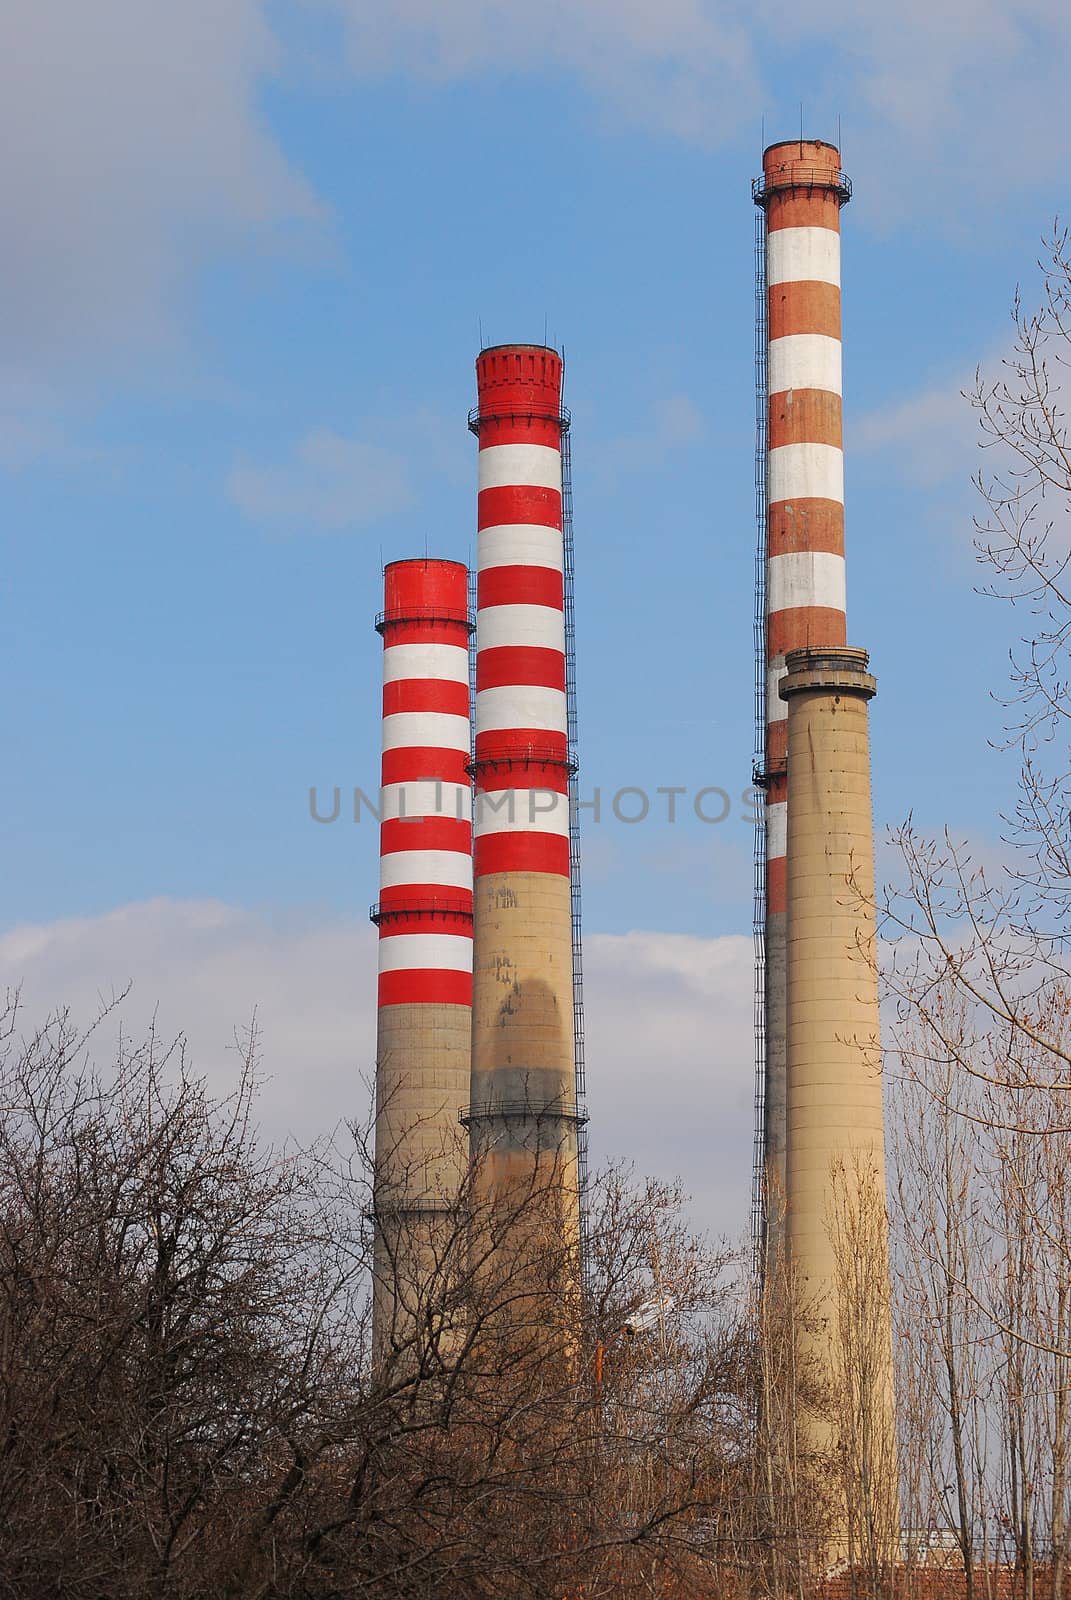 Thermoelectric power plant chimneys by varbenov